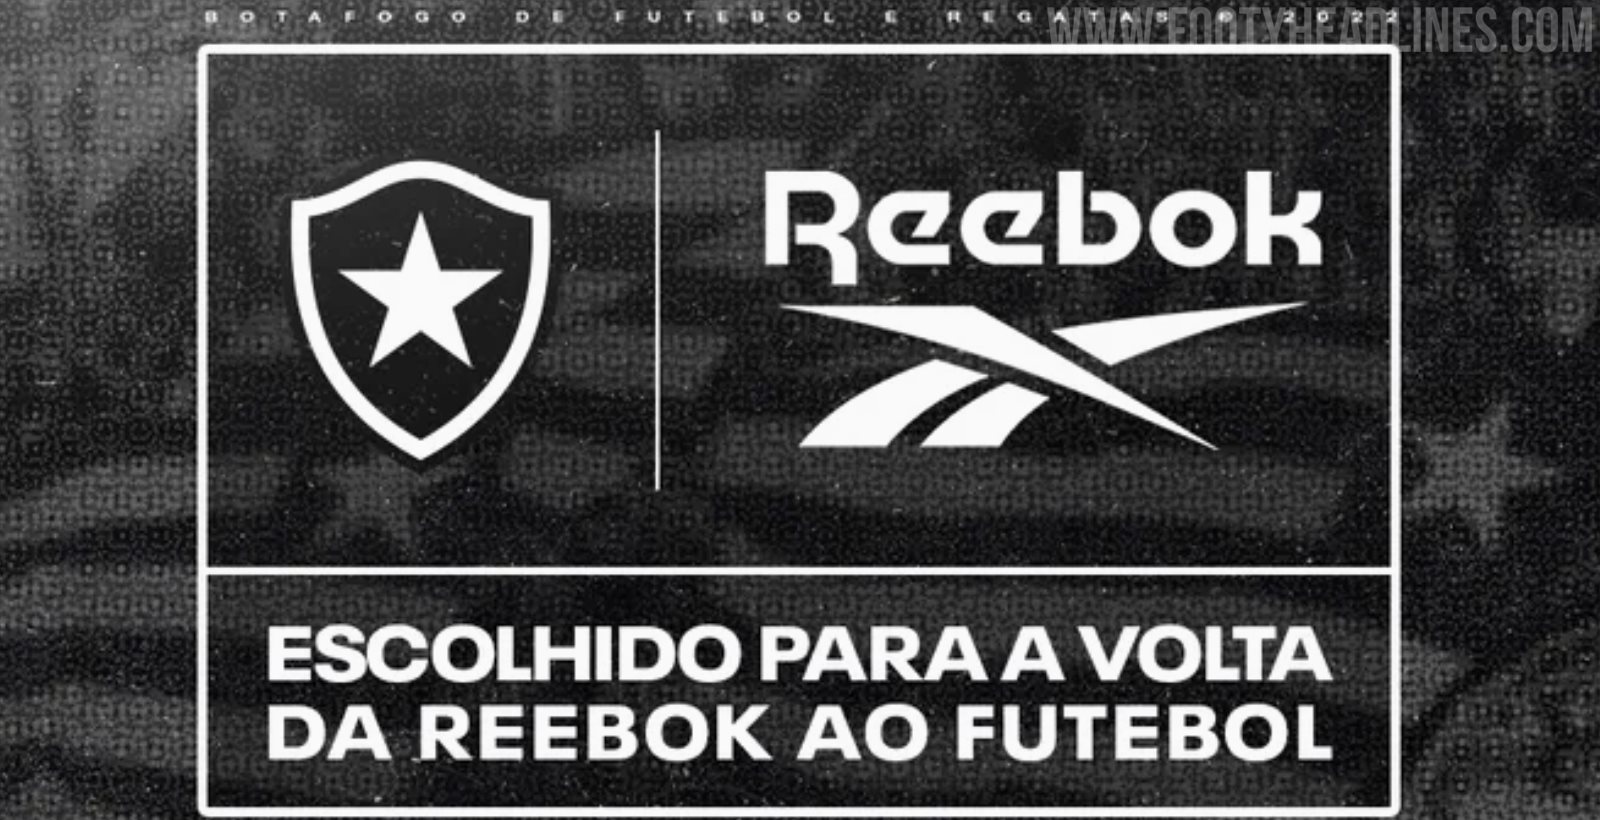 Reebok Return: Panama 2023 Home & Away Kits Released - Footy Headlines